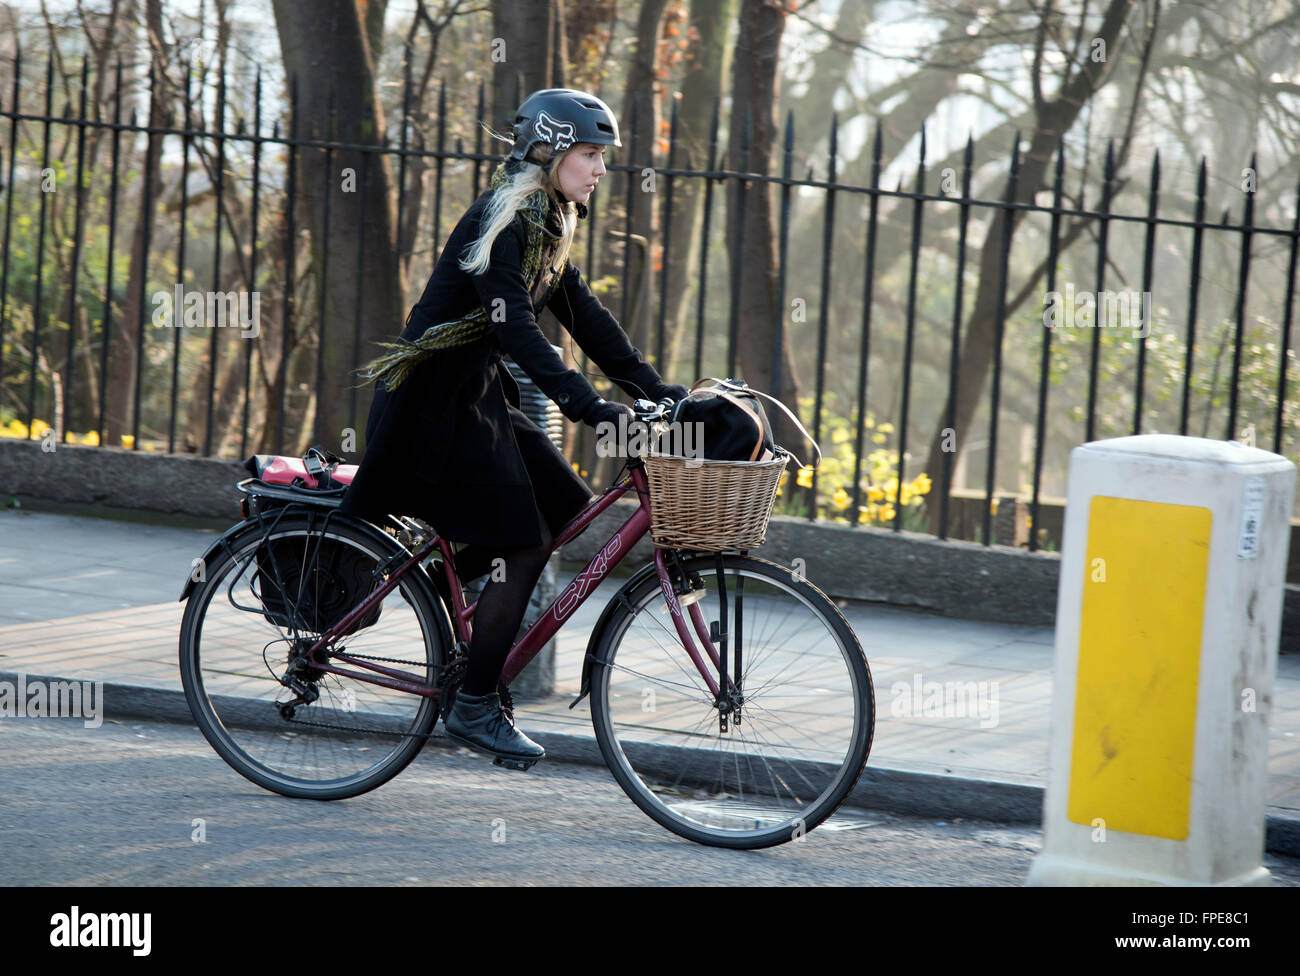 woman cyclist commuter bike basket on way to work Stock Photo